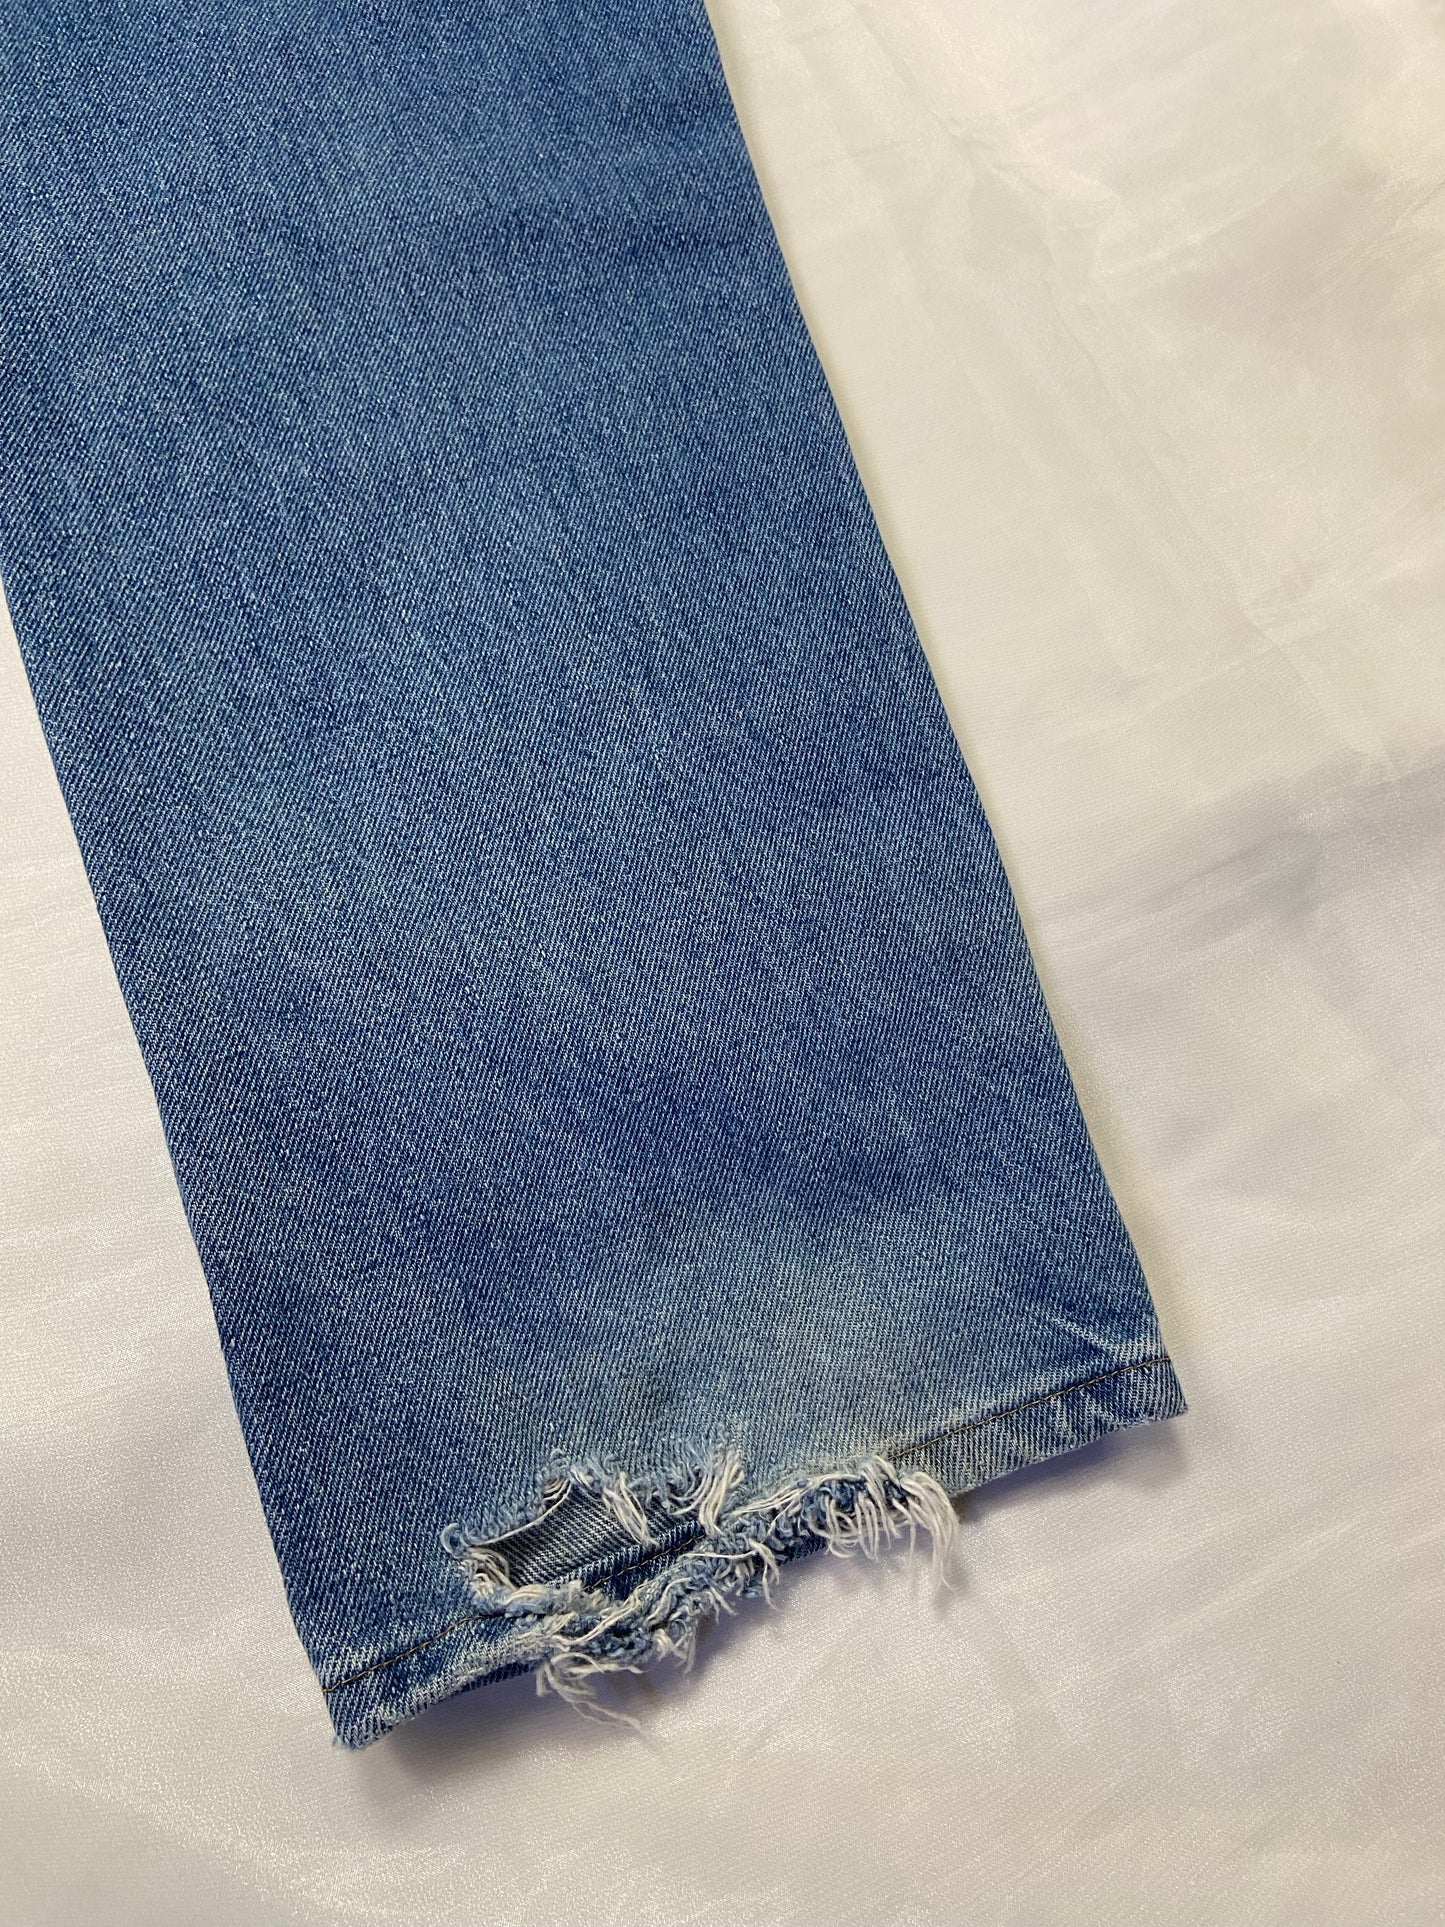 Medium Wash Wrangler Jeans - 32”